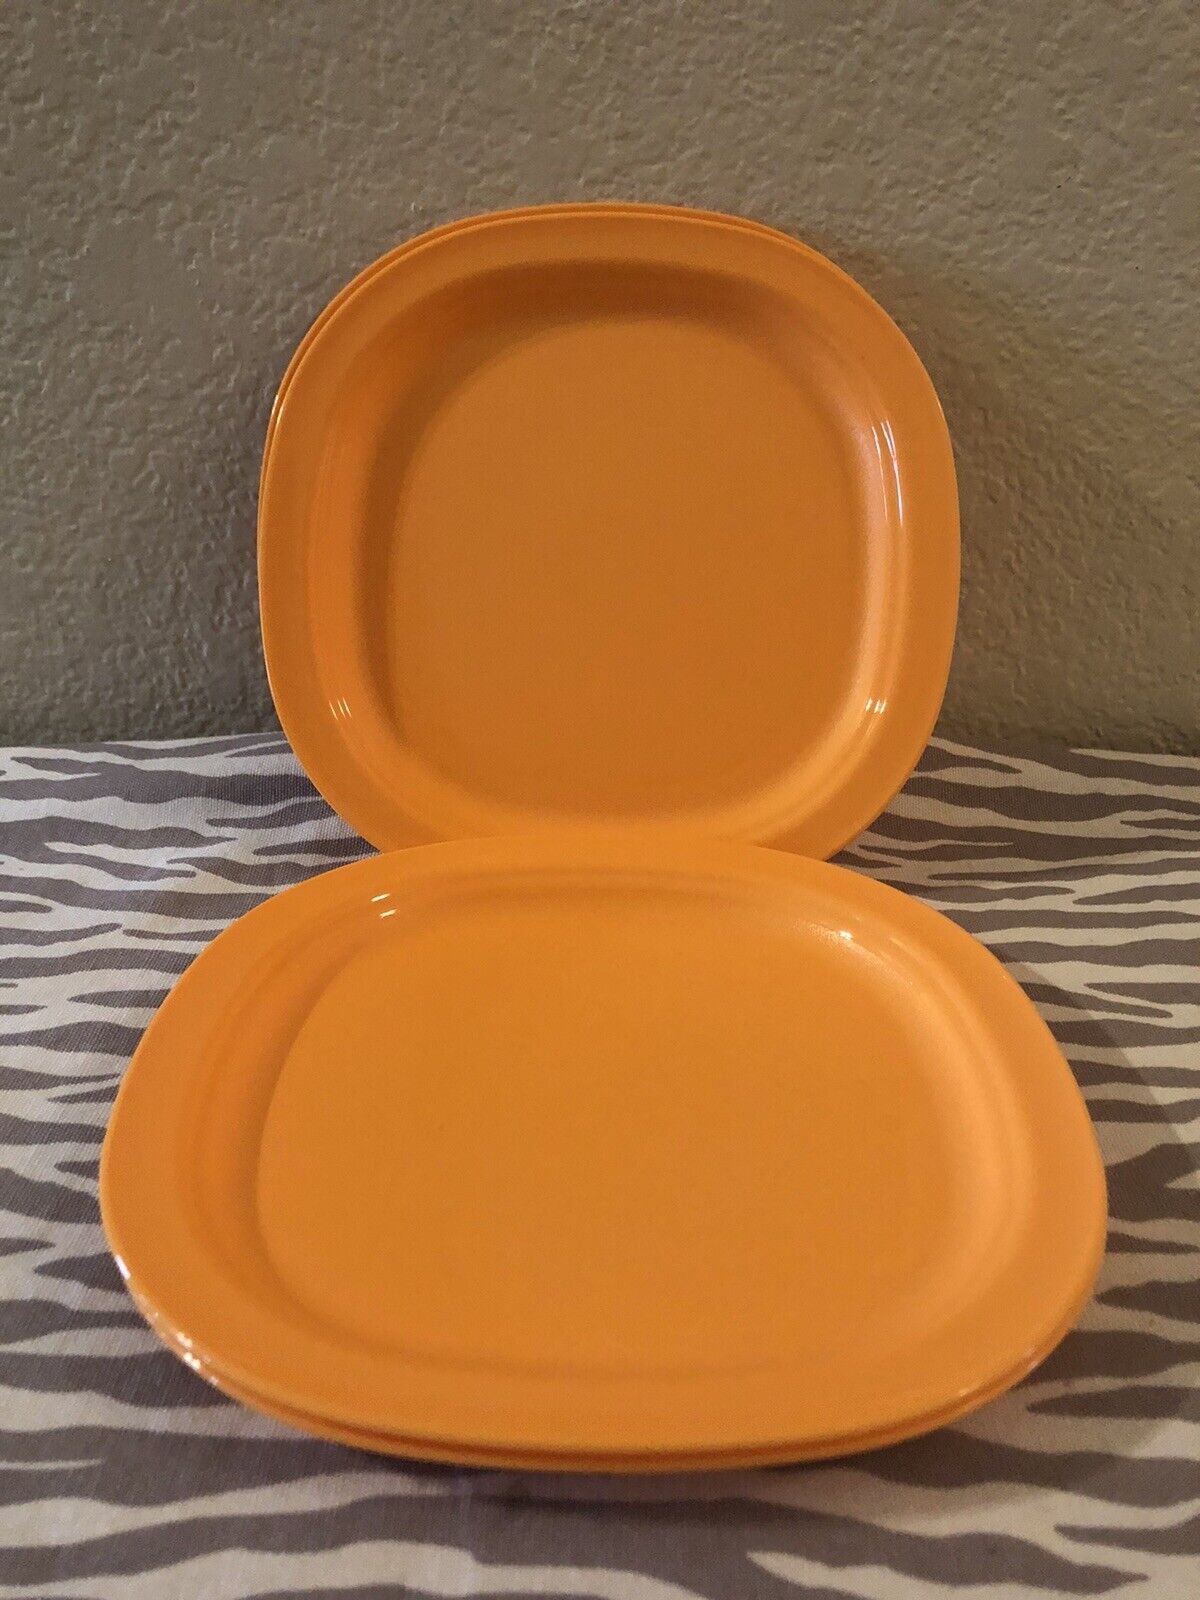 Tupperware Luncheon Plates Dessert Plates Set of 4 Orange 7 3/4” New Tupperware - фотография #4